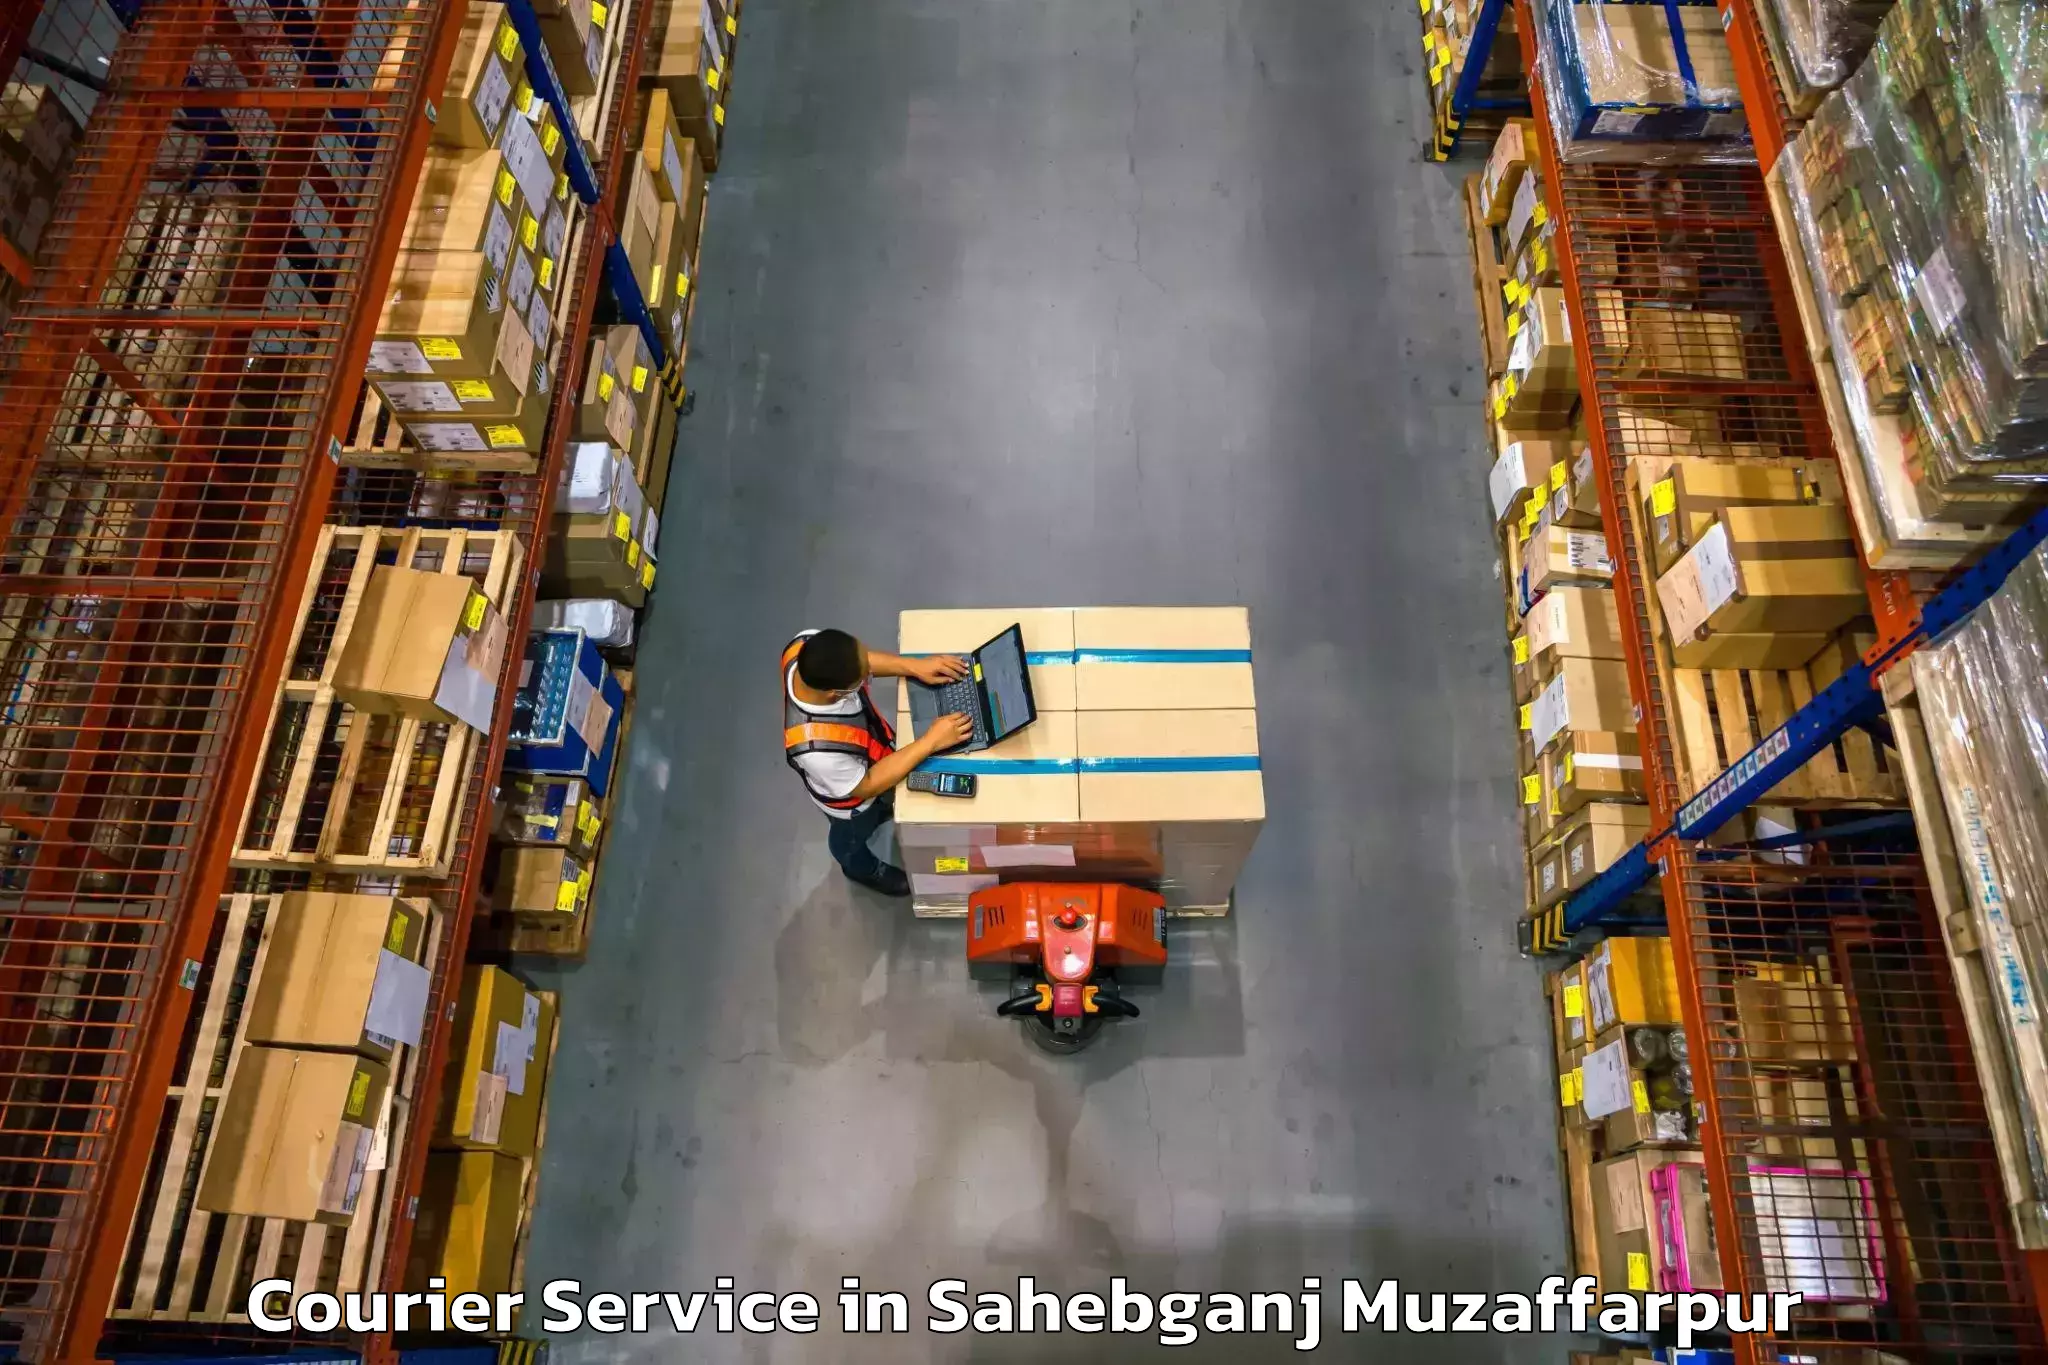 State-of-the-art courier technology in Sahebganj Muzaffarpur